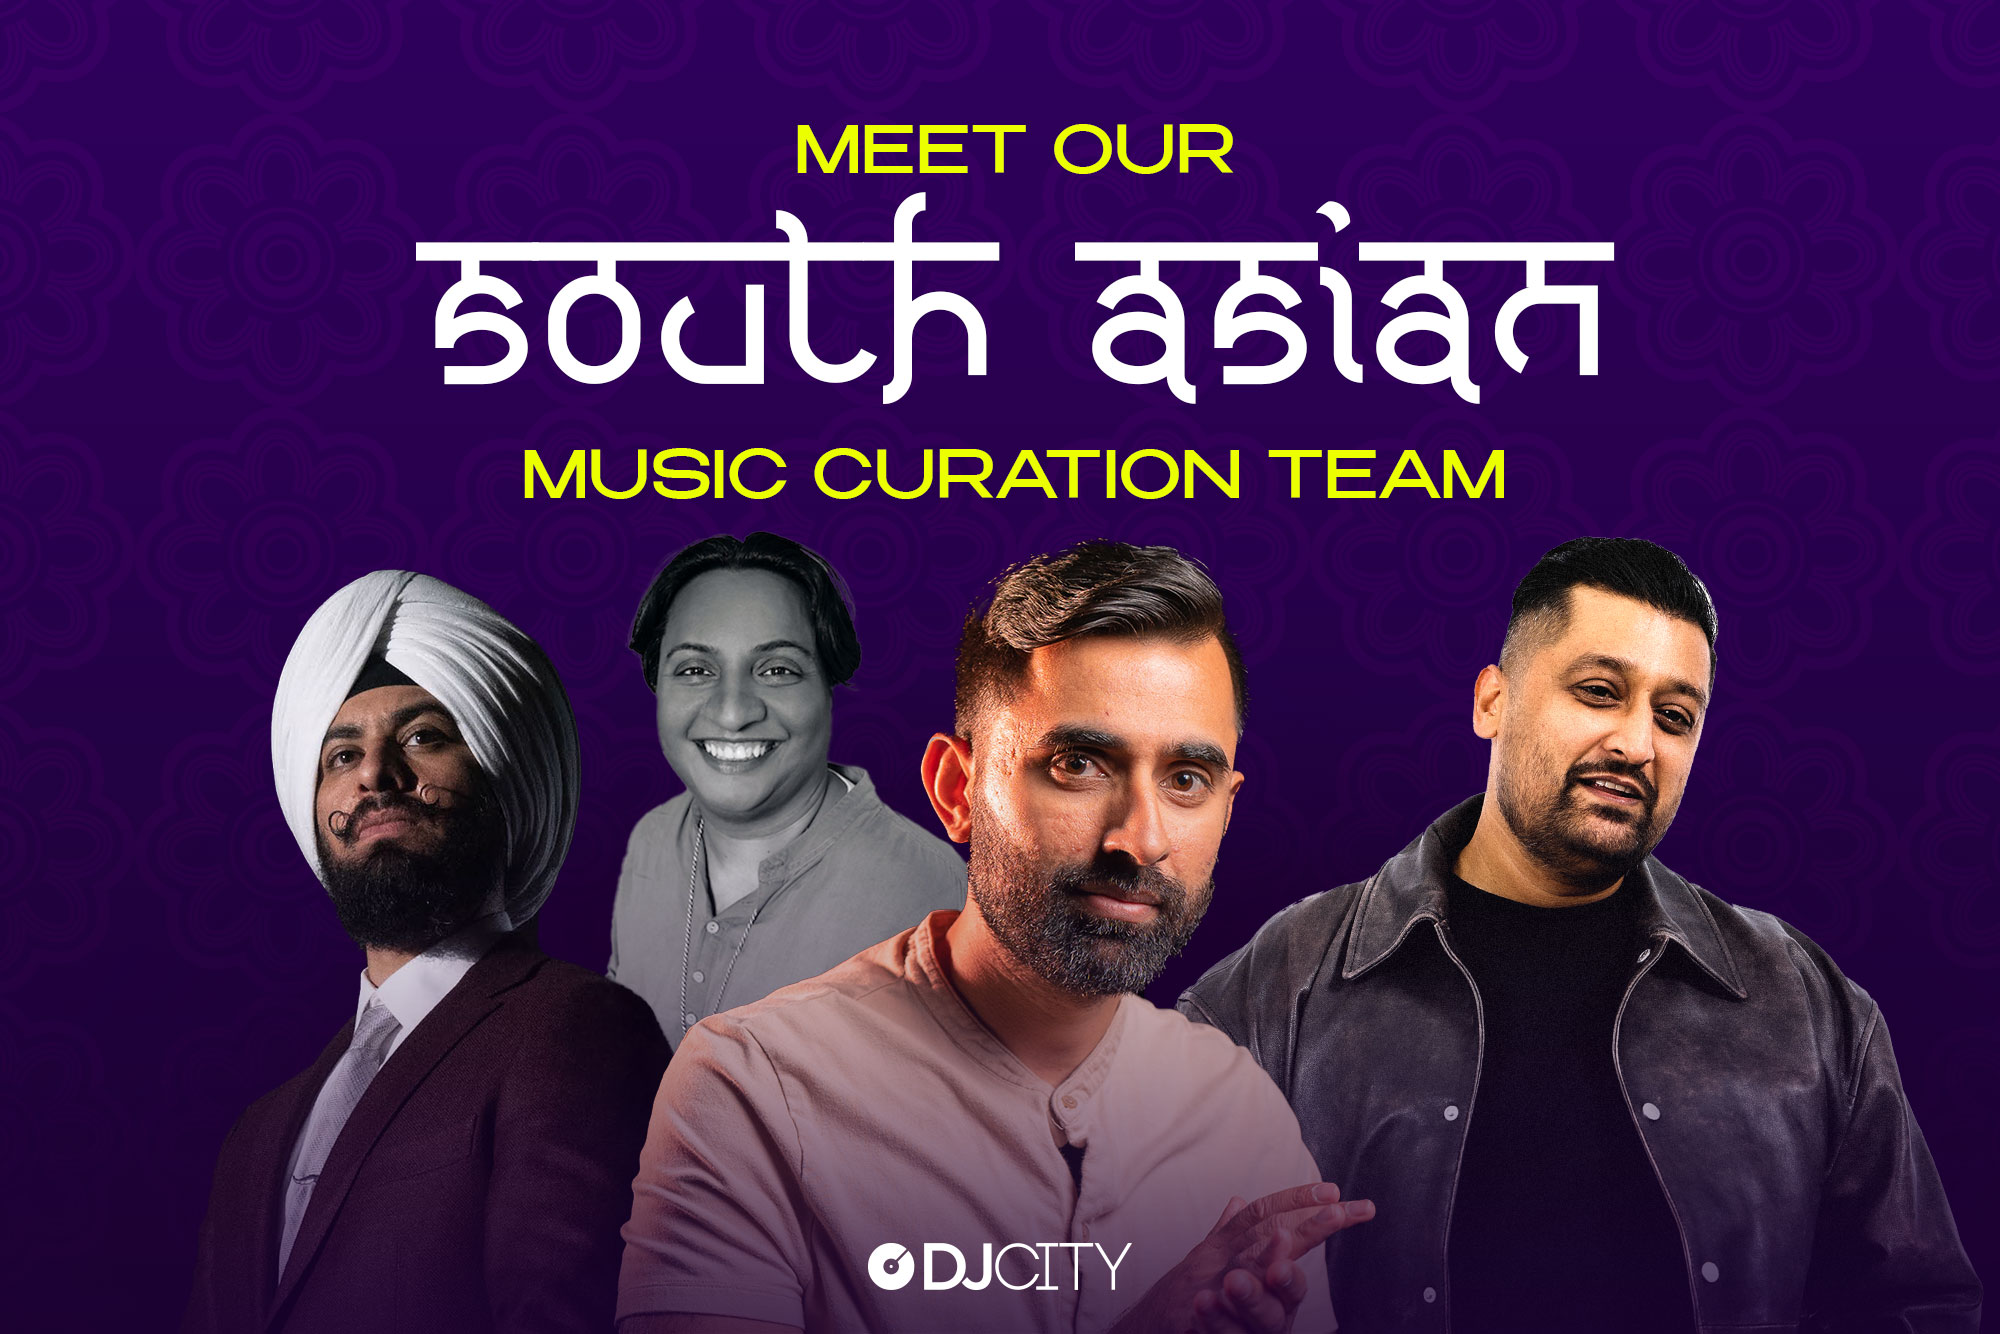 Meet Our South Asian Music Curation Team